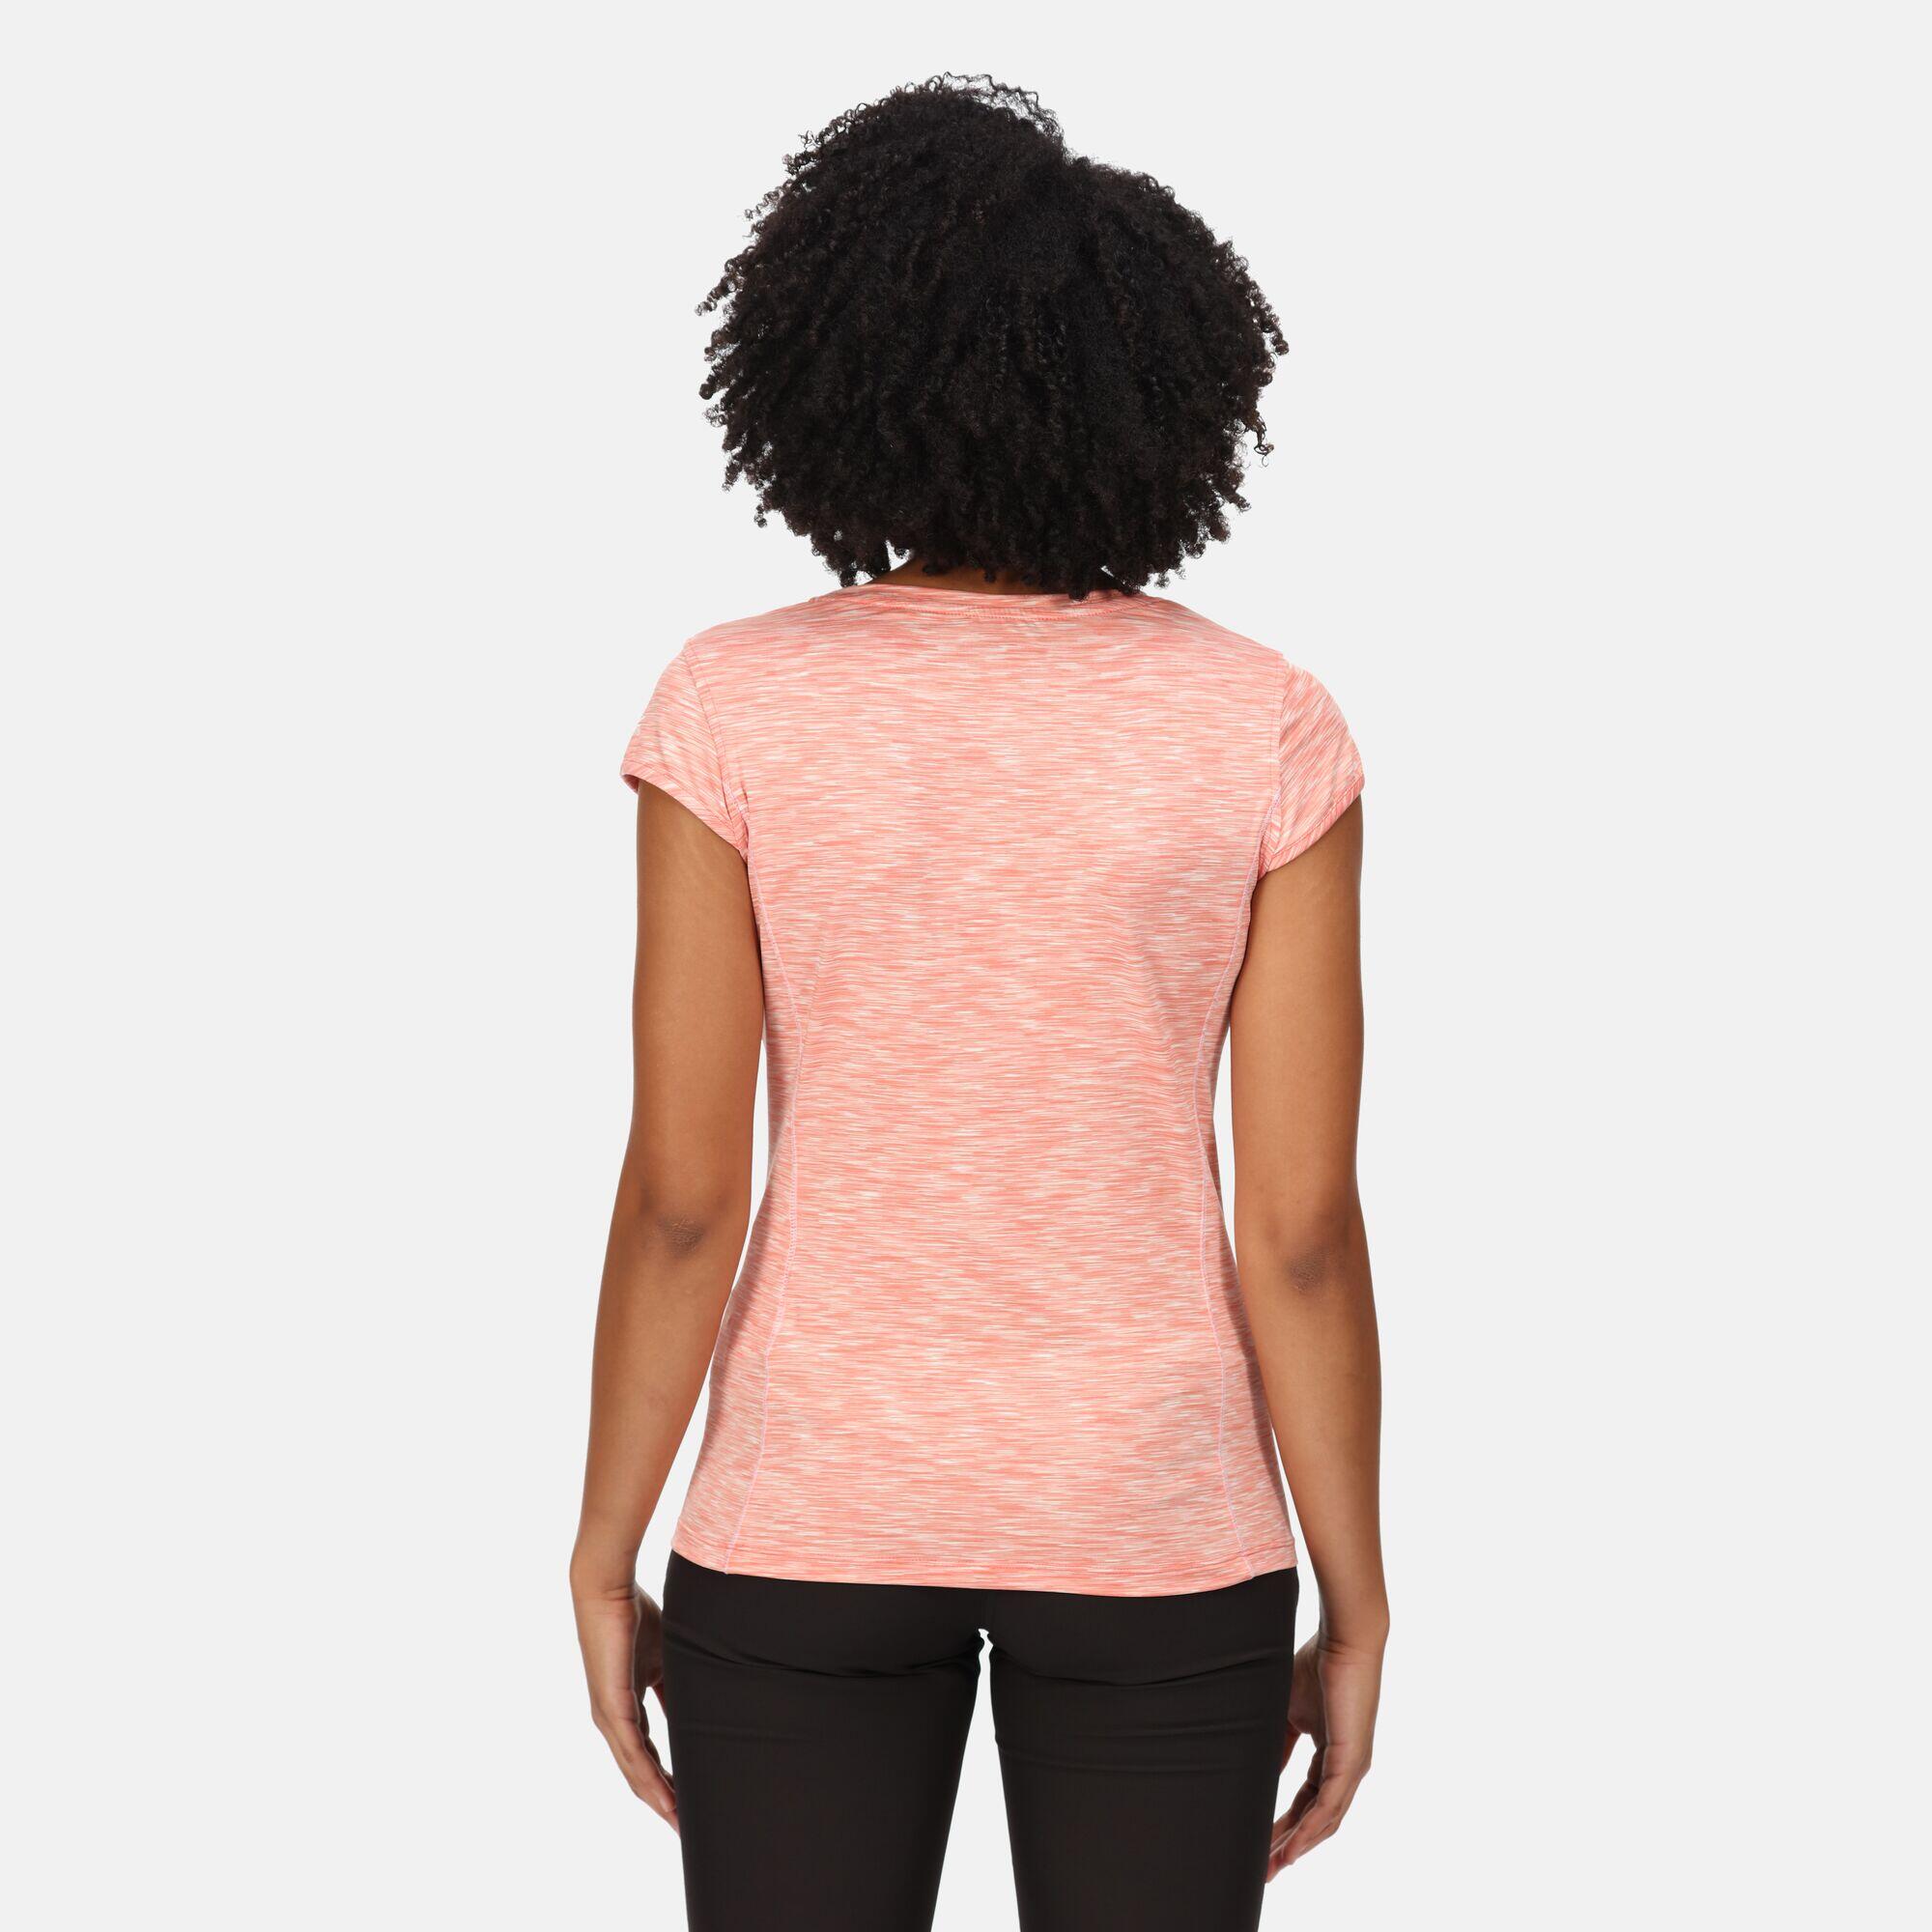 Hyperdimension II Women's Walking T-Shirt - Pink Coral 2/7